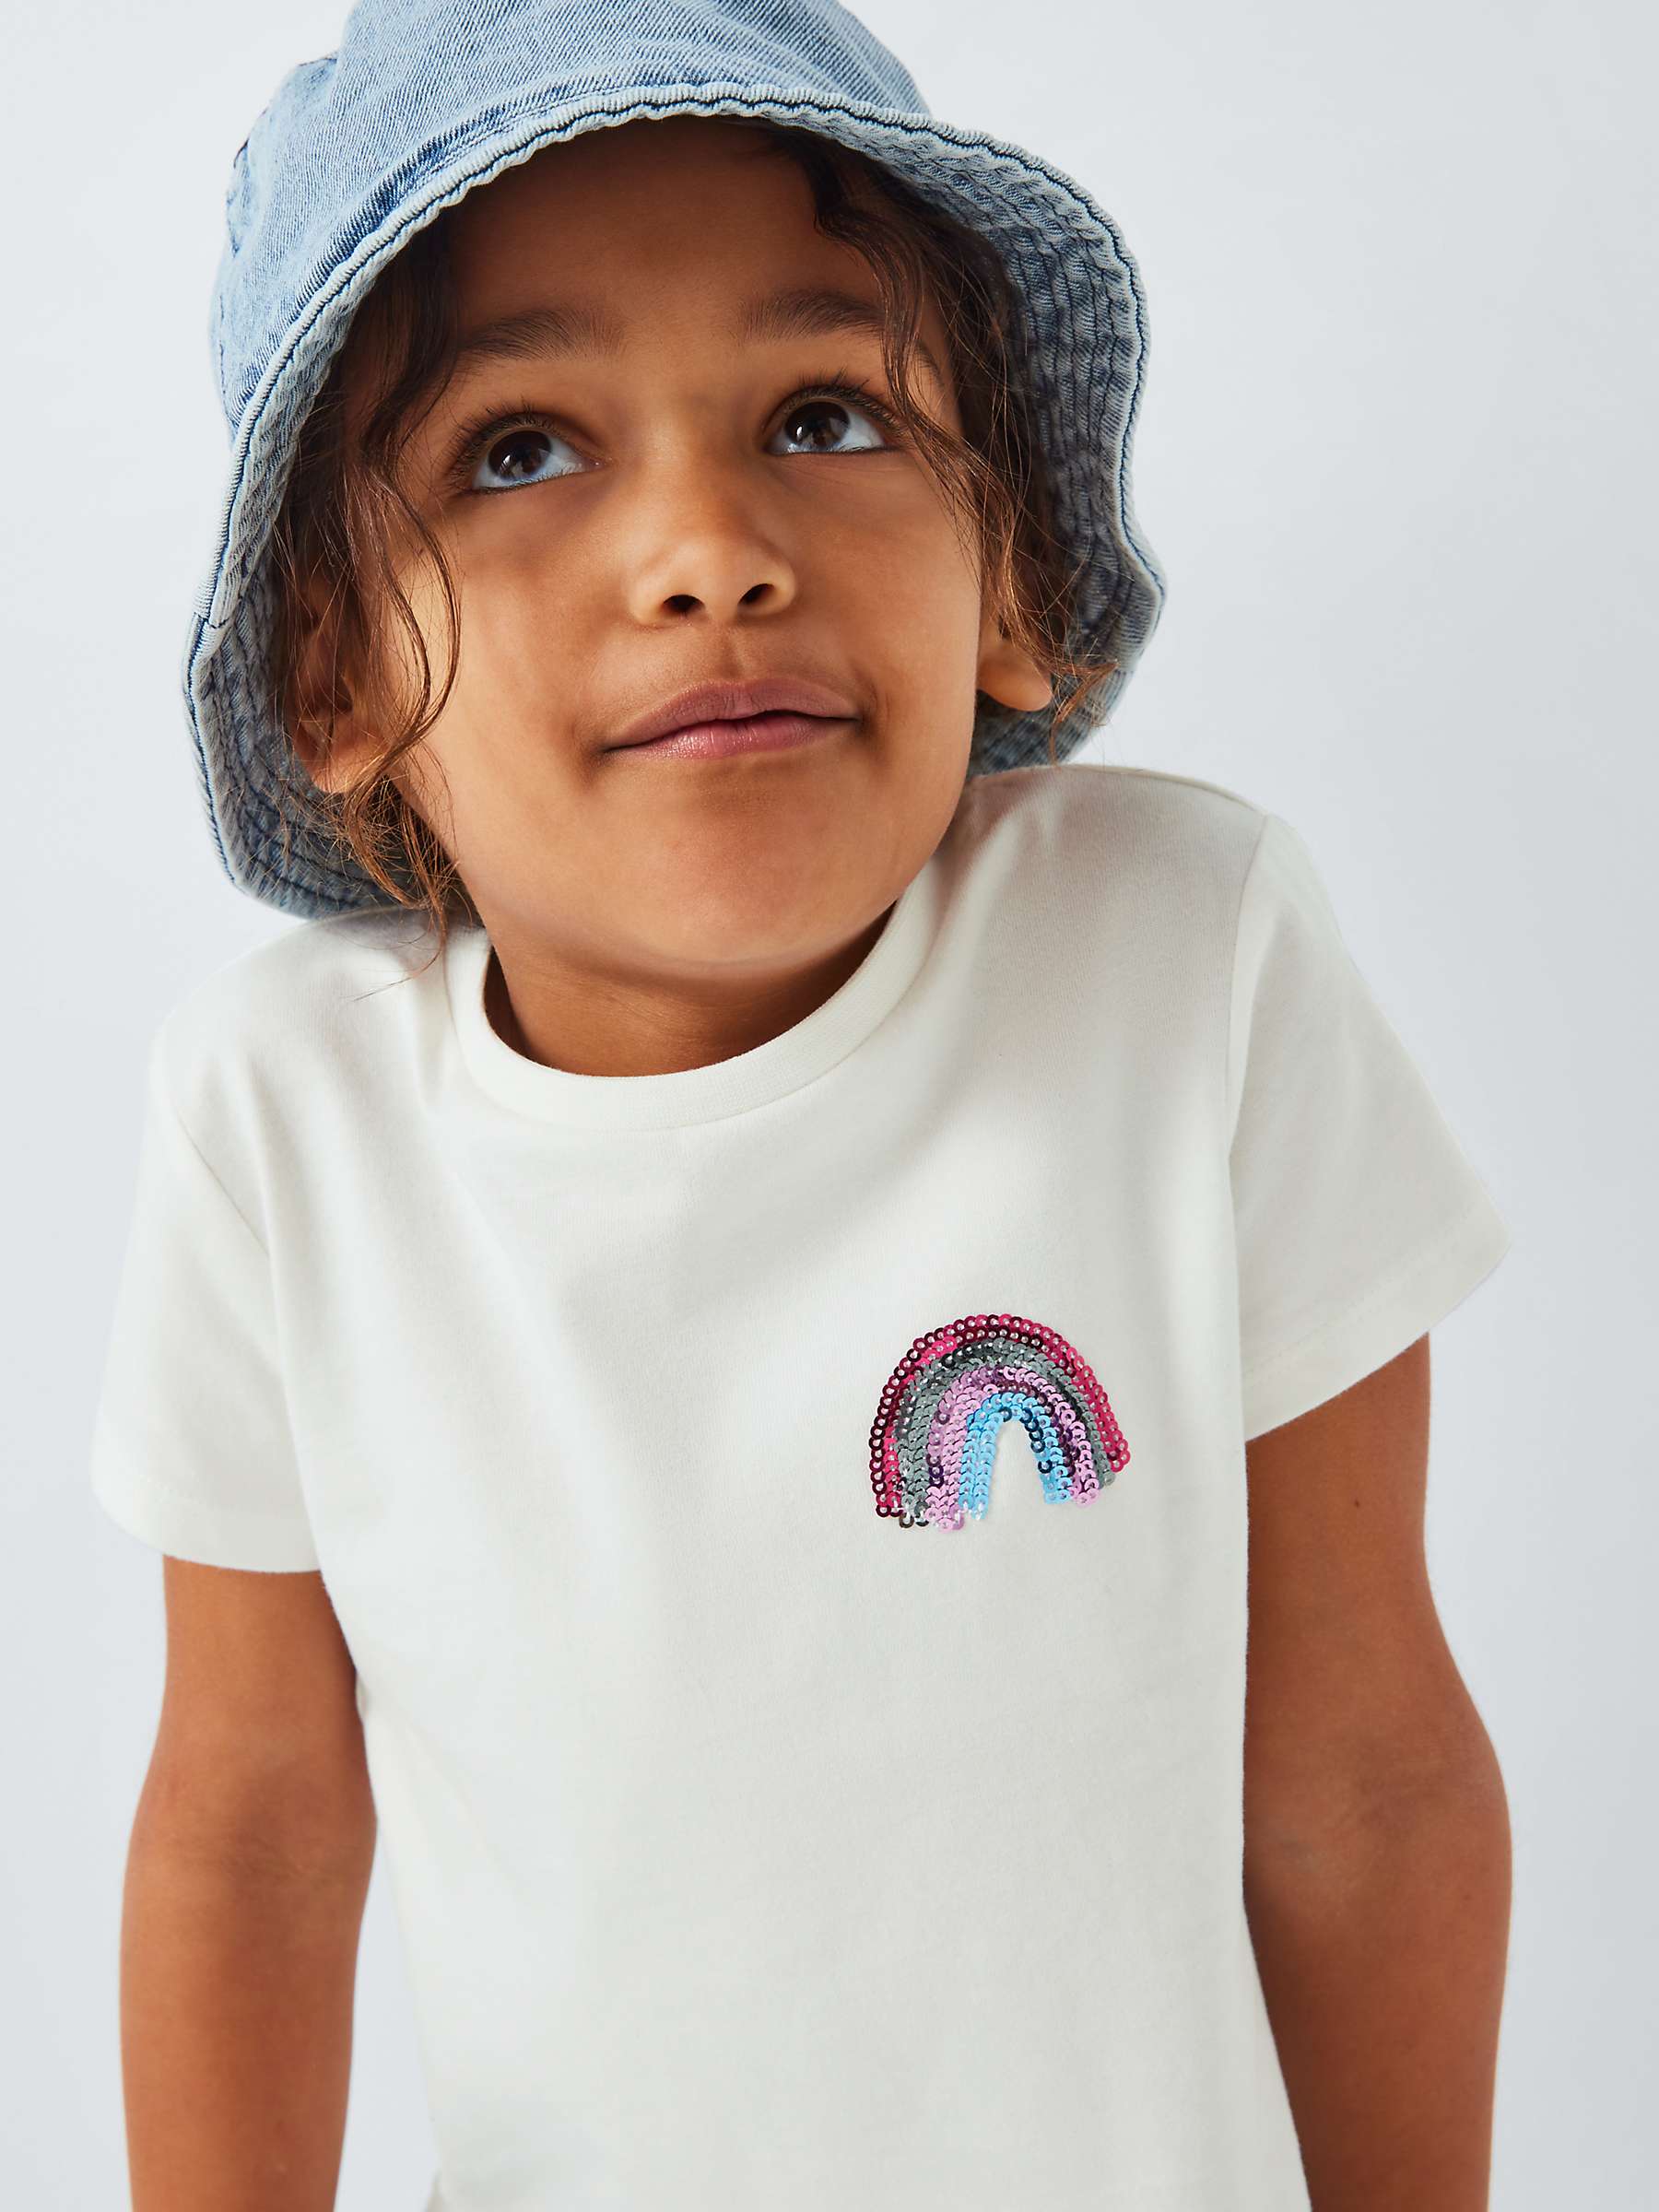 Buy John Lewis Kids' Stripe/RainbowShort Sleeve T-Shirts, Pack of 3, White/Multi Online at johnlewis.com